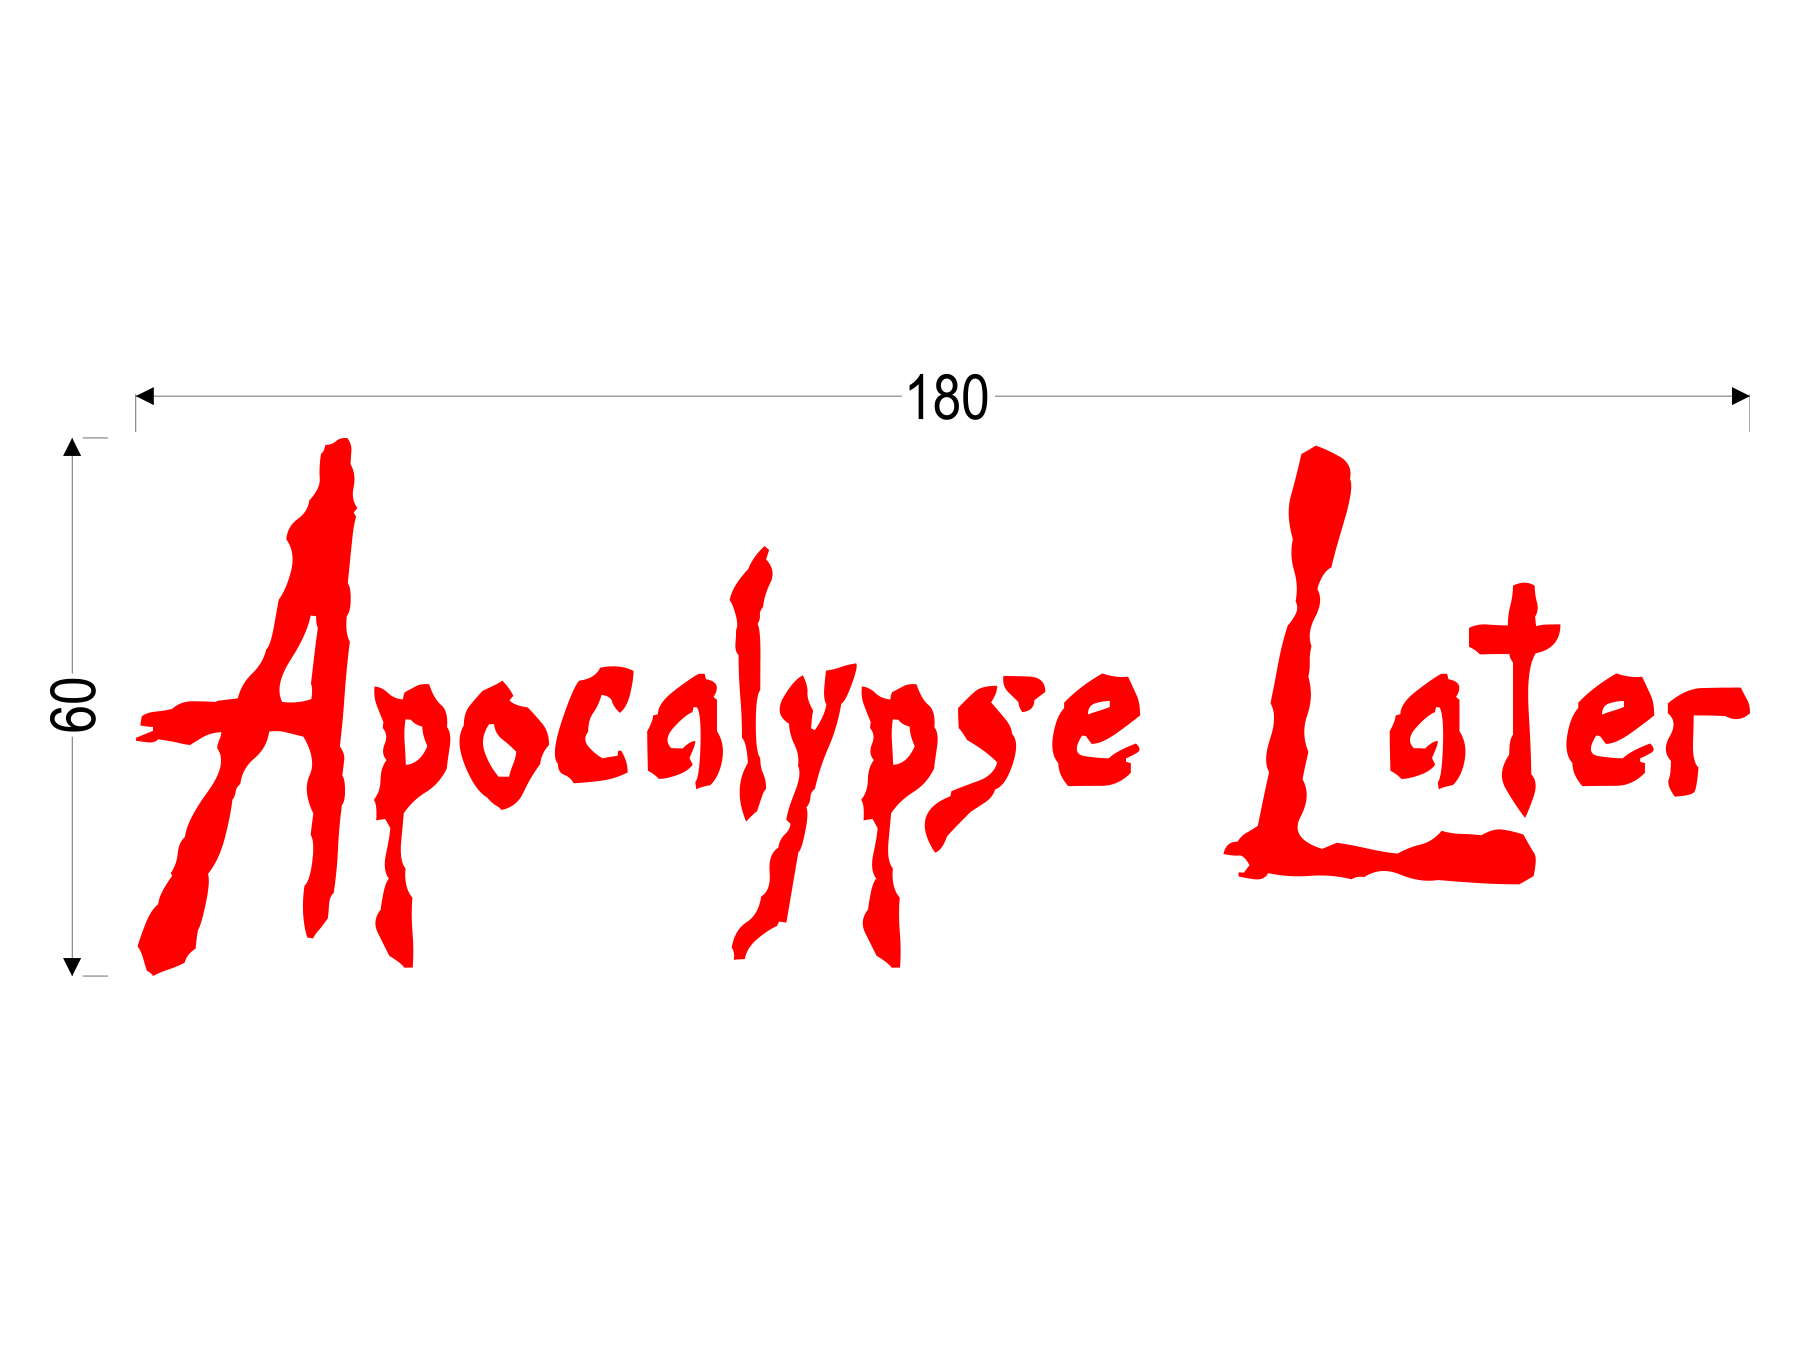 Apocalypse Later | Großer Transferdruck